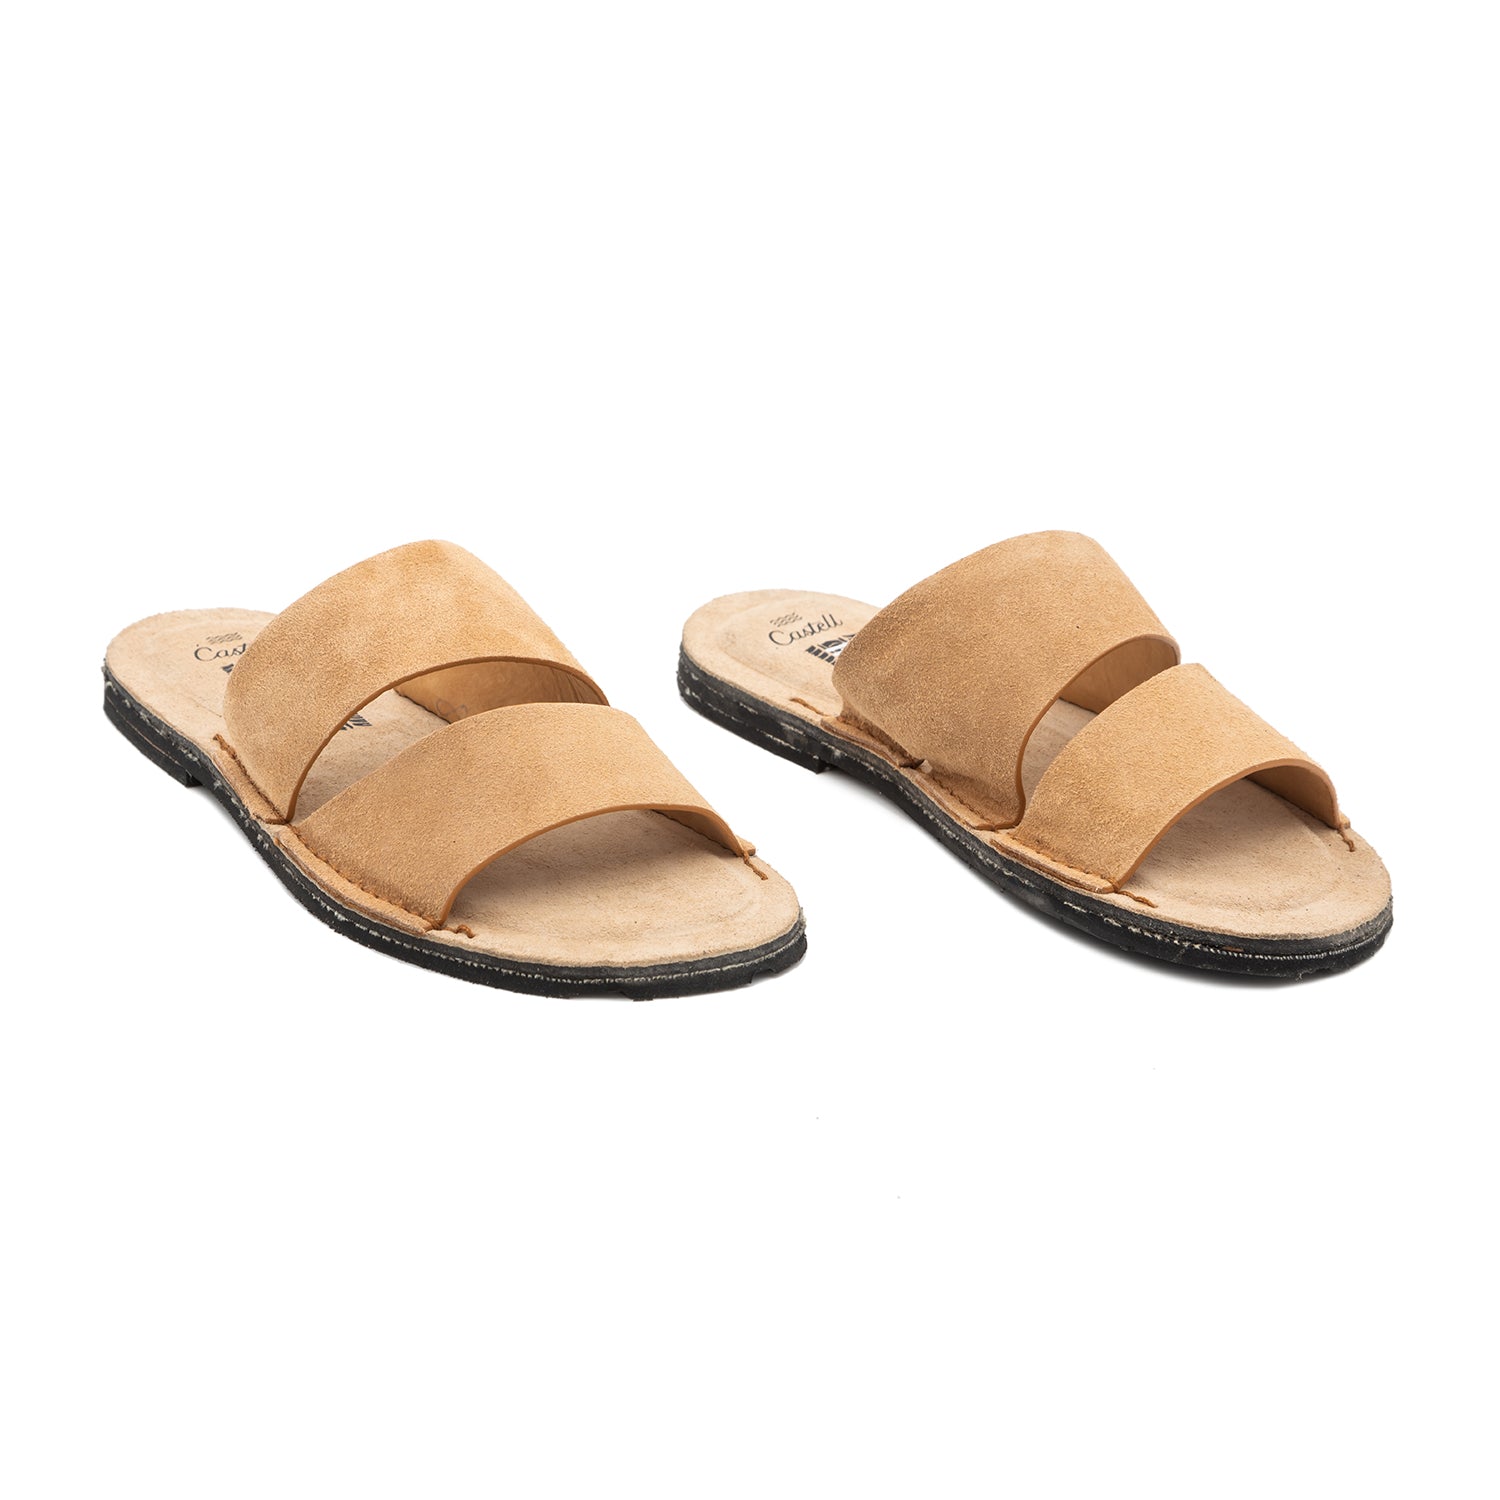 Plain Leather Sandal For Women - Cala Mitjana Bahia